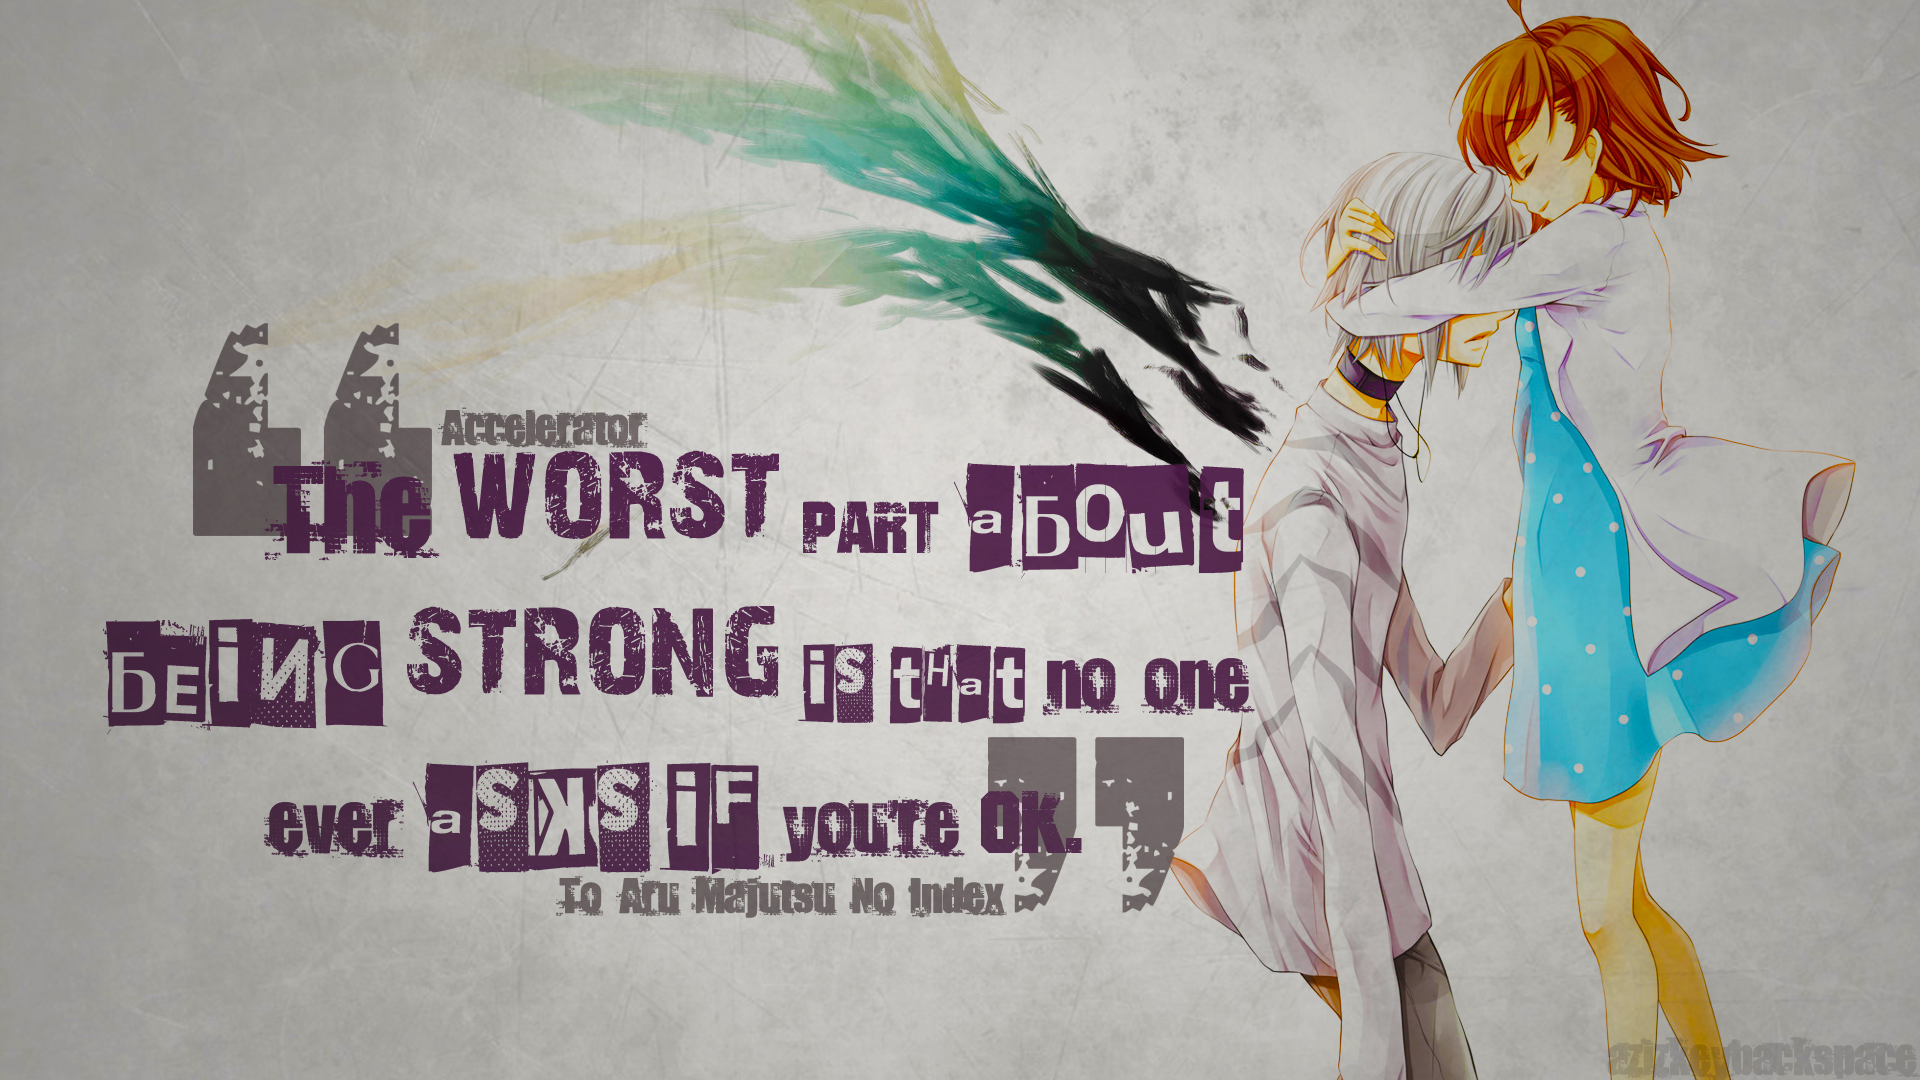 17+] Anime Quotes Wallpapers - WallpaperSafari